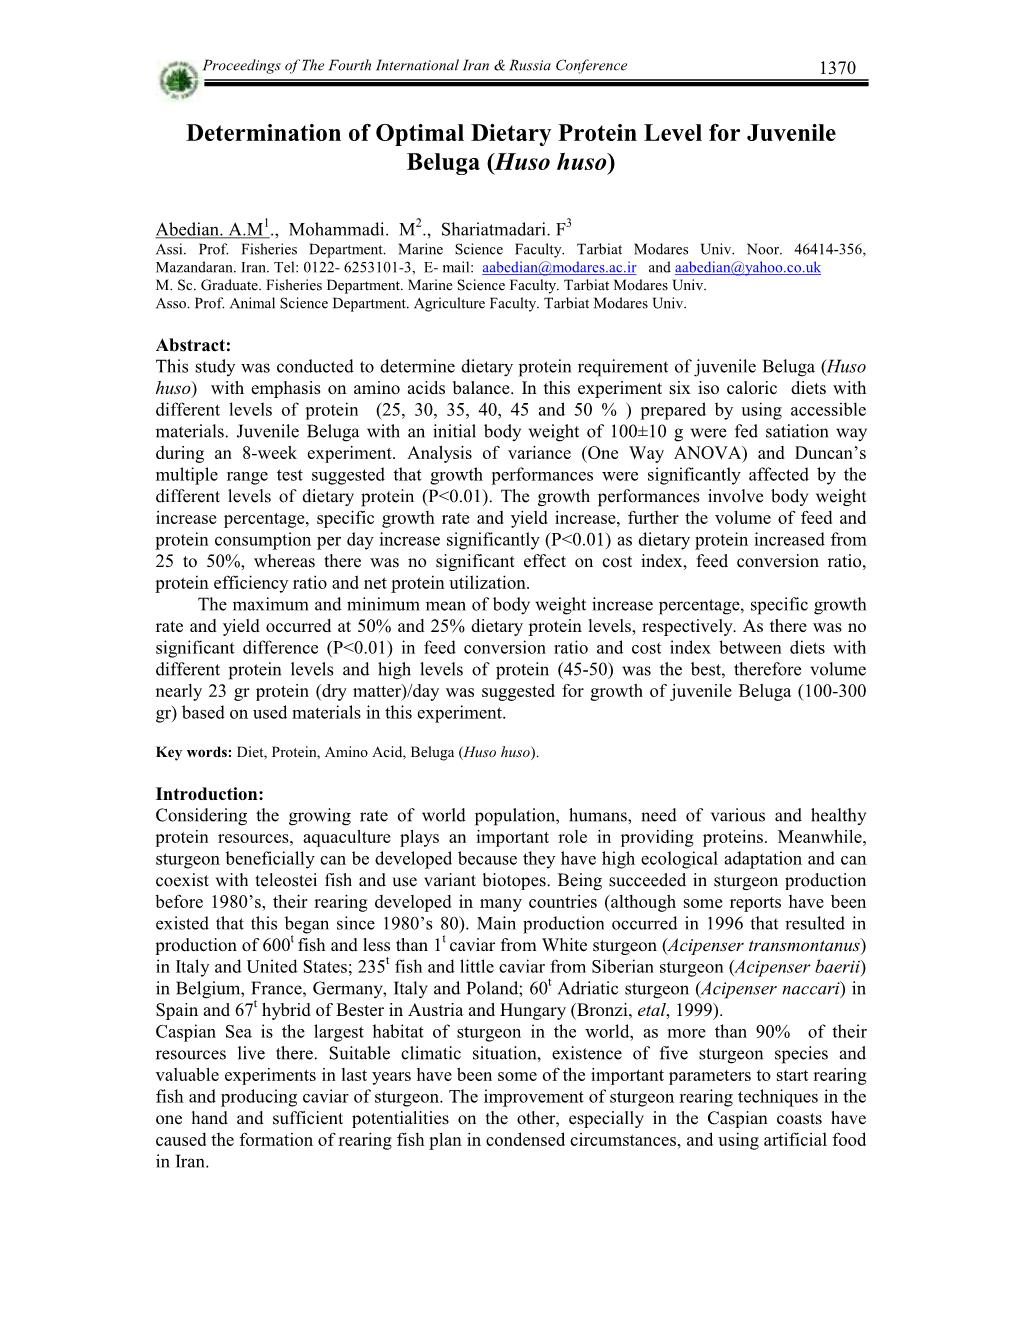 Determination of Optimal Dietary Protein Level for Juvenile Beluga (Huso Huso)